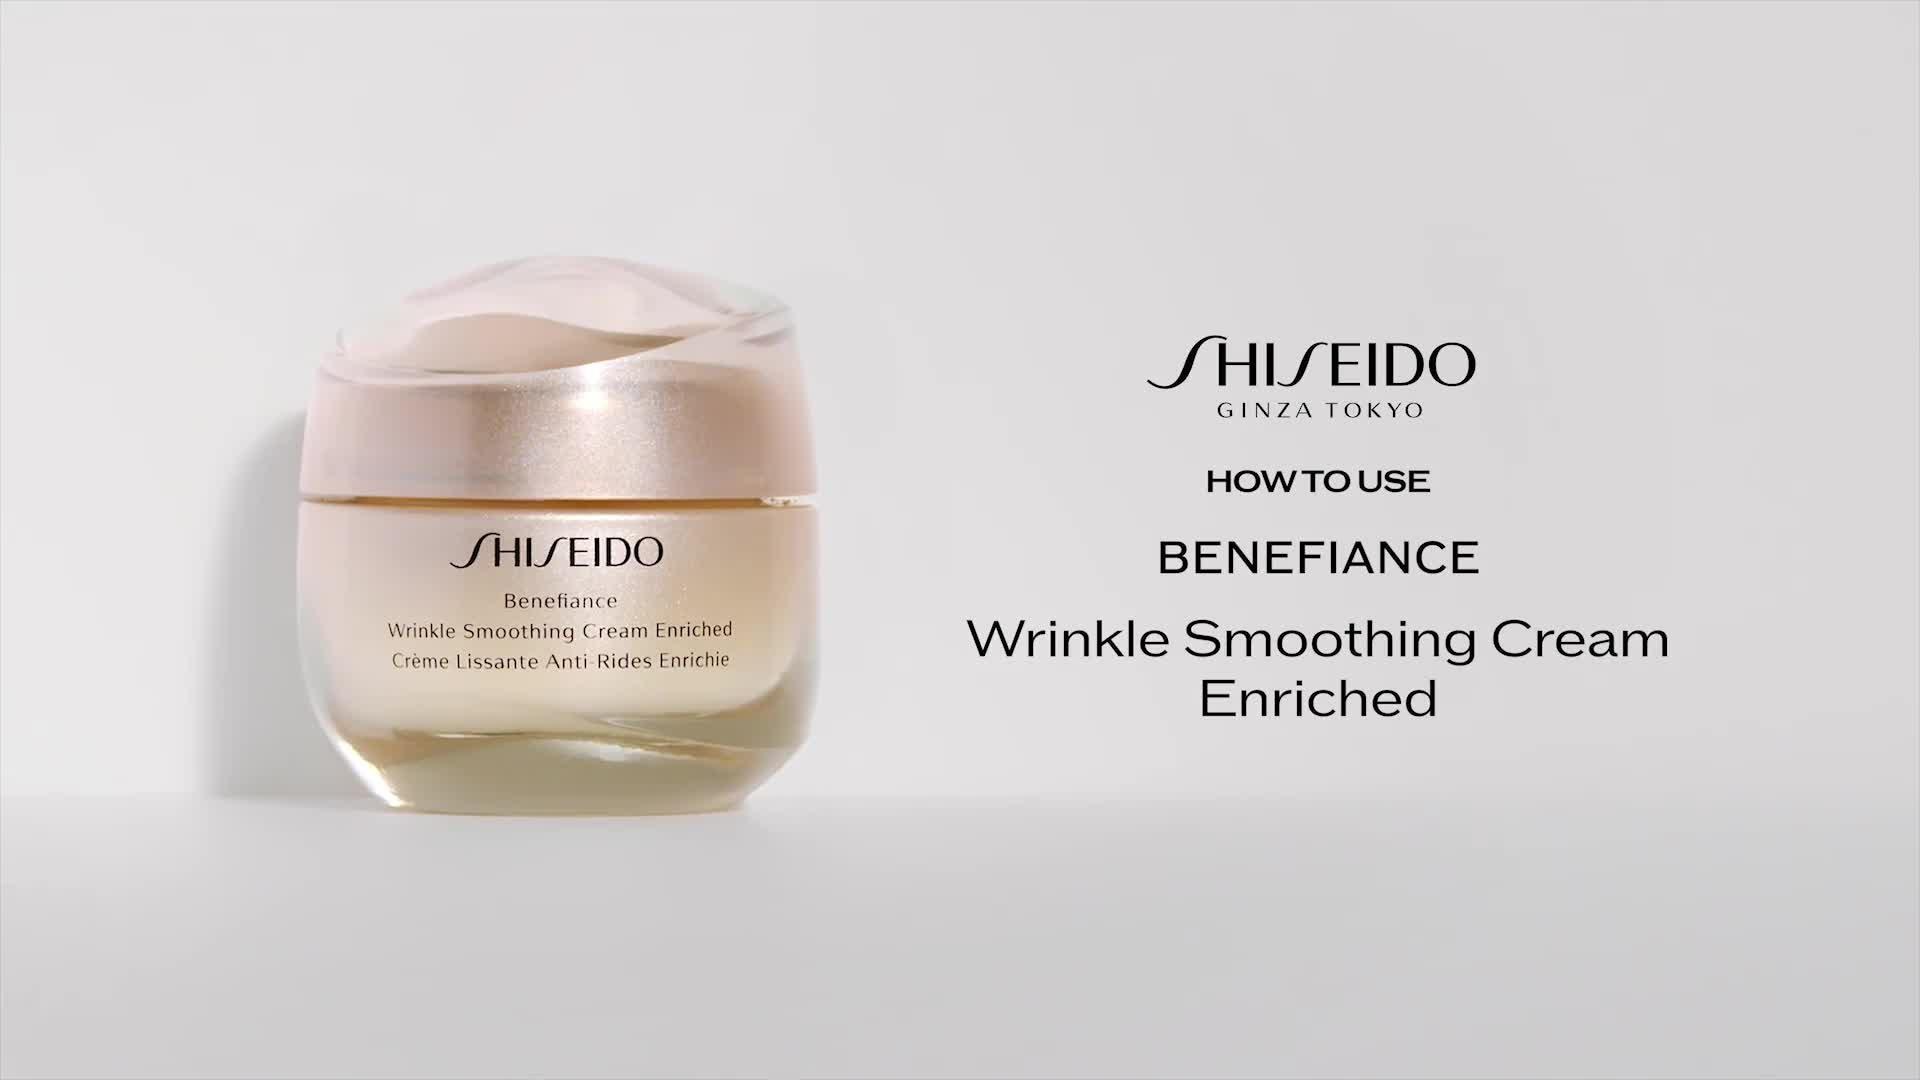 Shiseido "